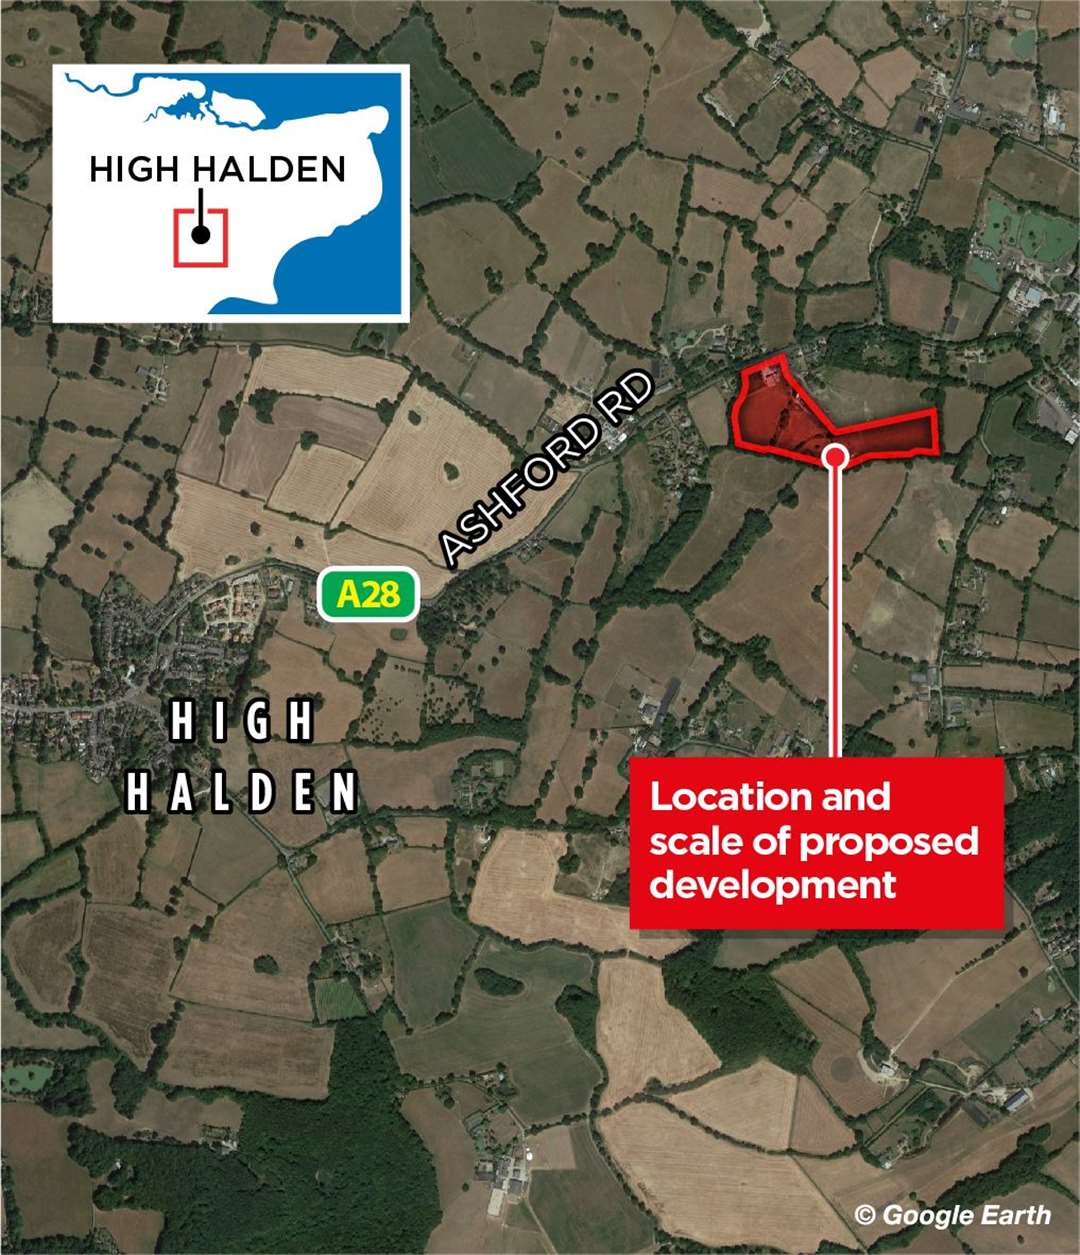 The new development will sit near to High Halden